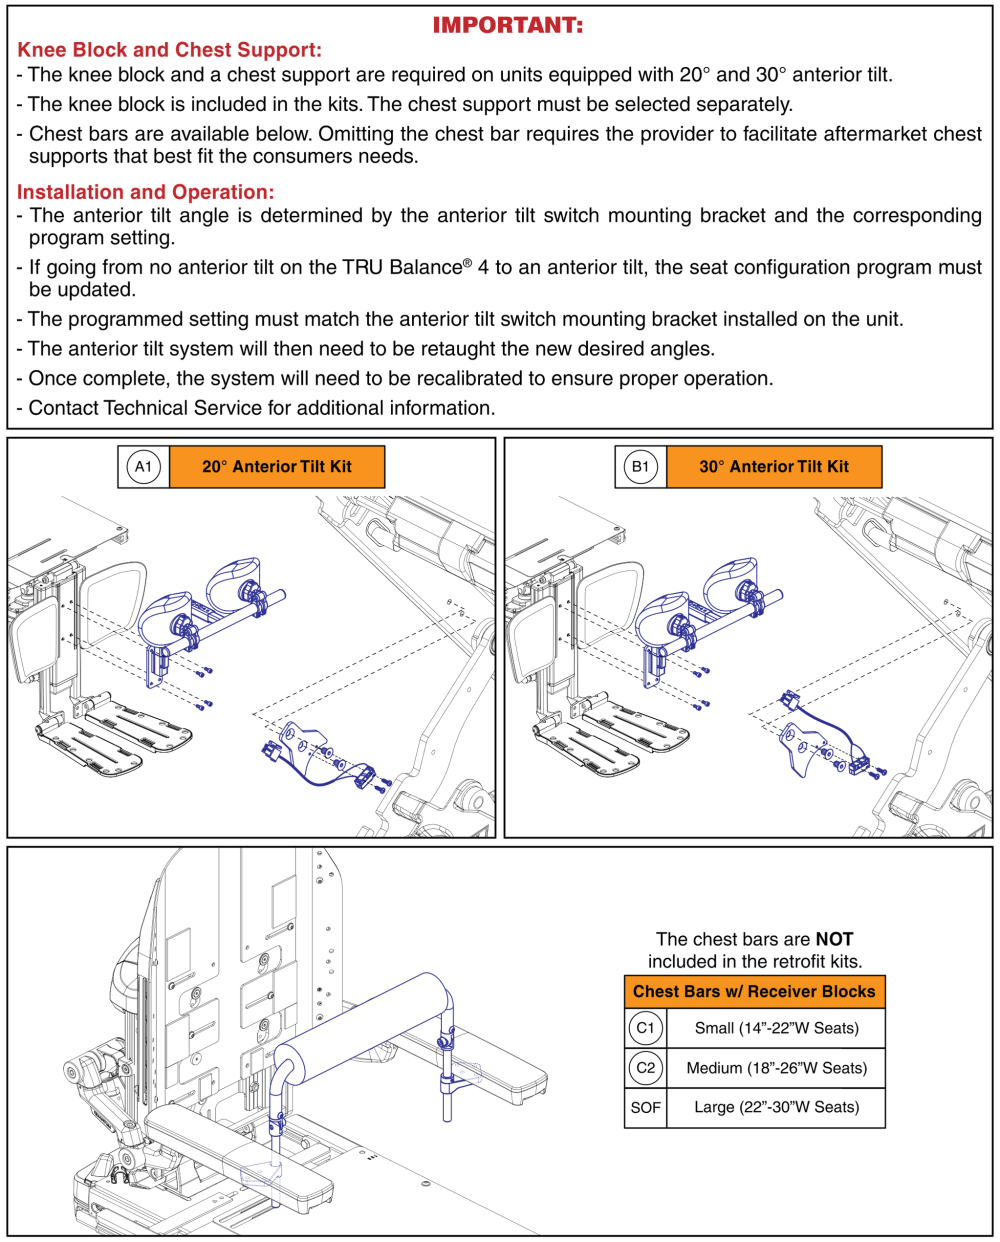 Anterior Tilt Angle Retrofit Kits, Tru Balance® 4 parts diagram